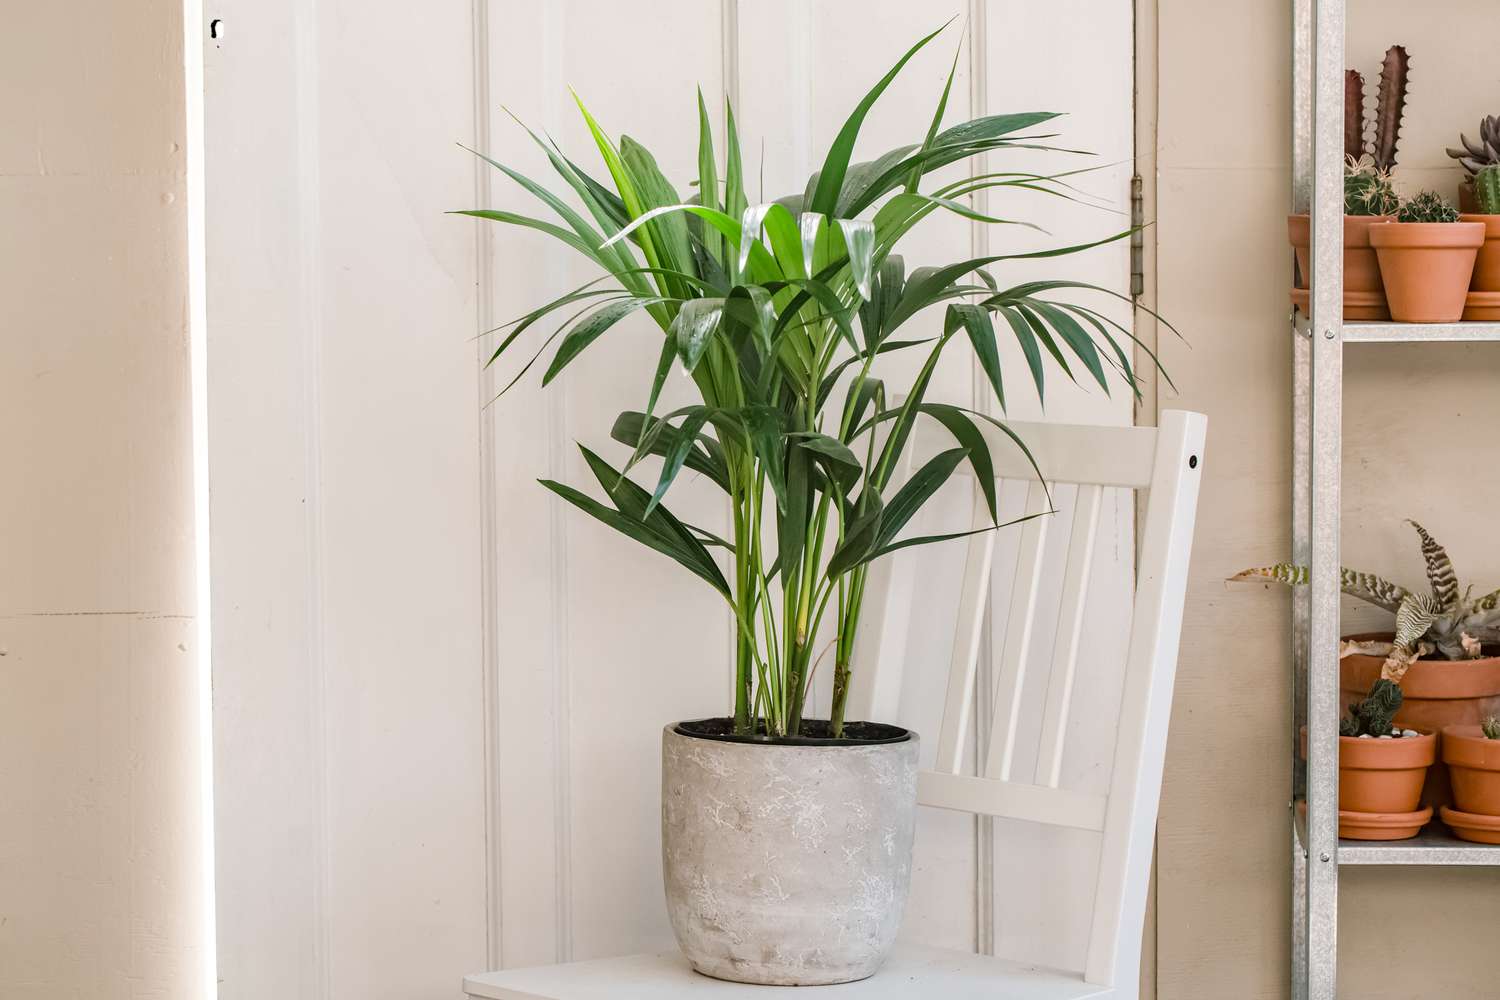 kentia palm in a home